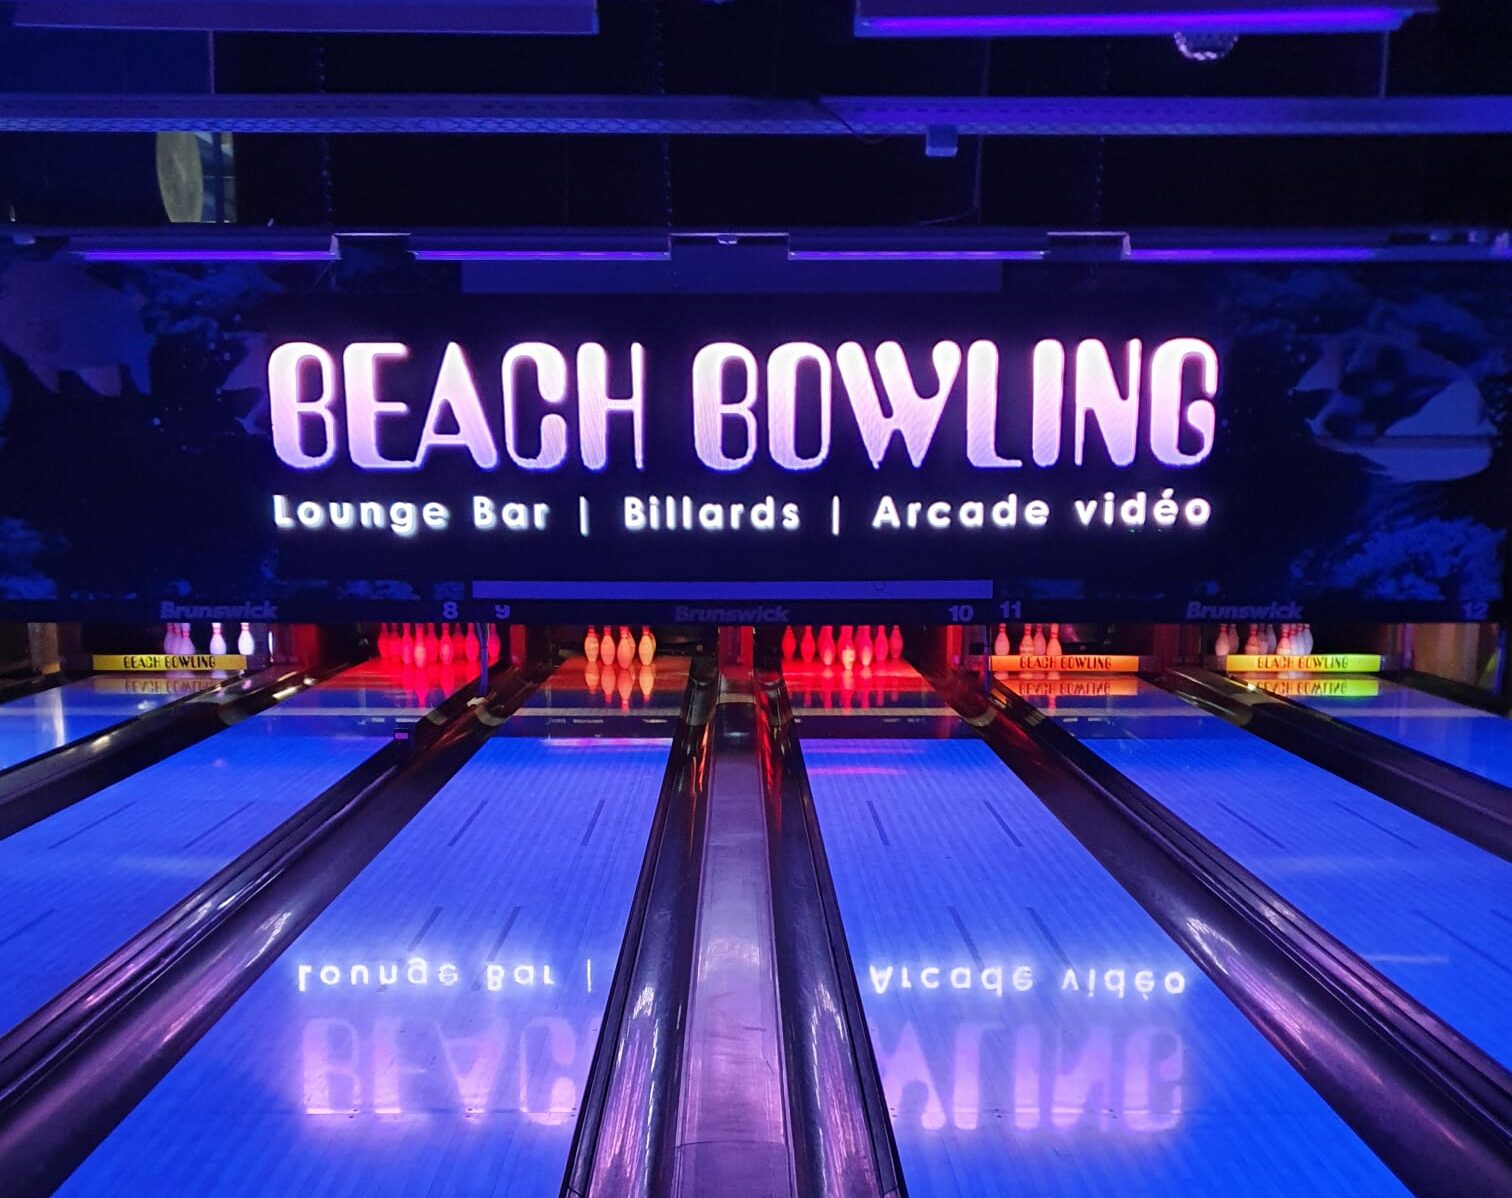 Beach Bowling - Ecran Indoor - Pitch 4.8